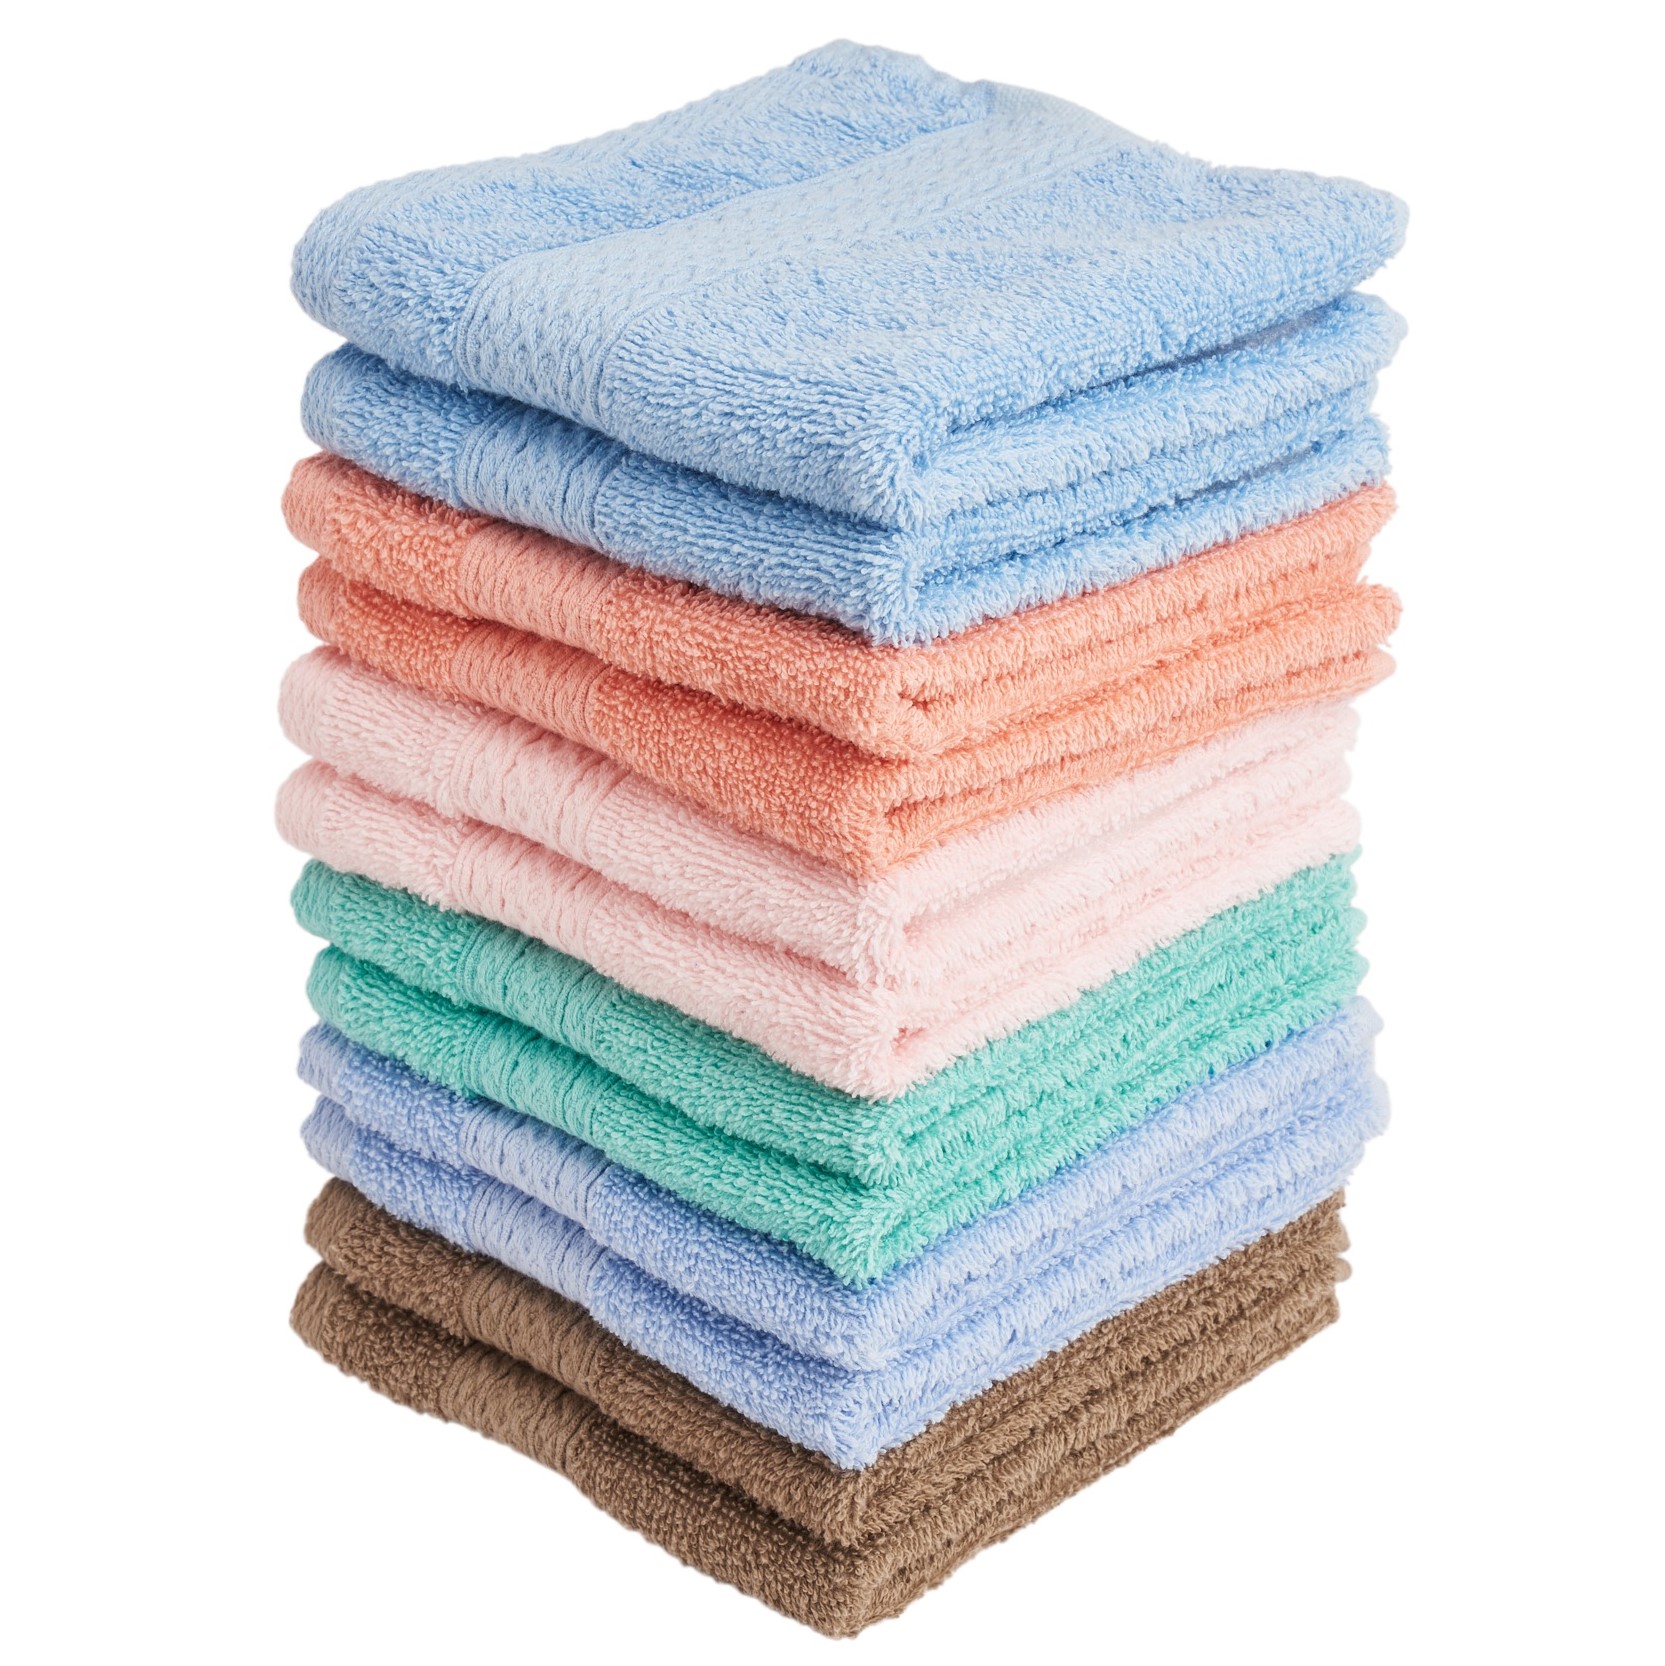 Arl Home 8 Piece Bath Towel Set White 2 Oversized Large Bath Towels 2 Hand Towels and 4 Washcloths Ultra Soft Fluffy Towel Set